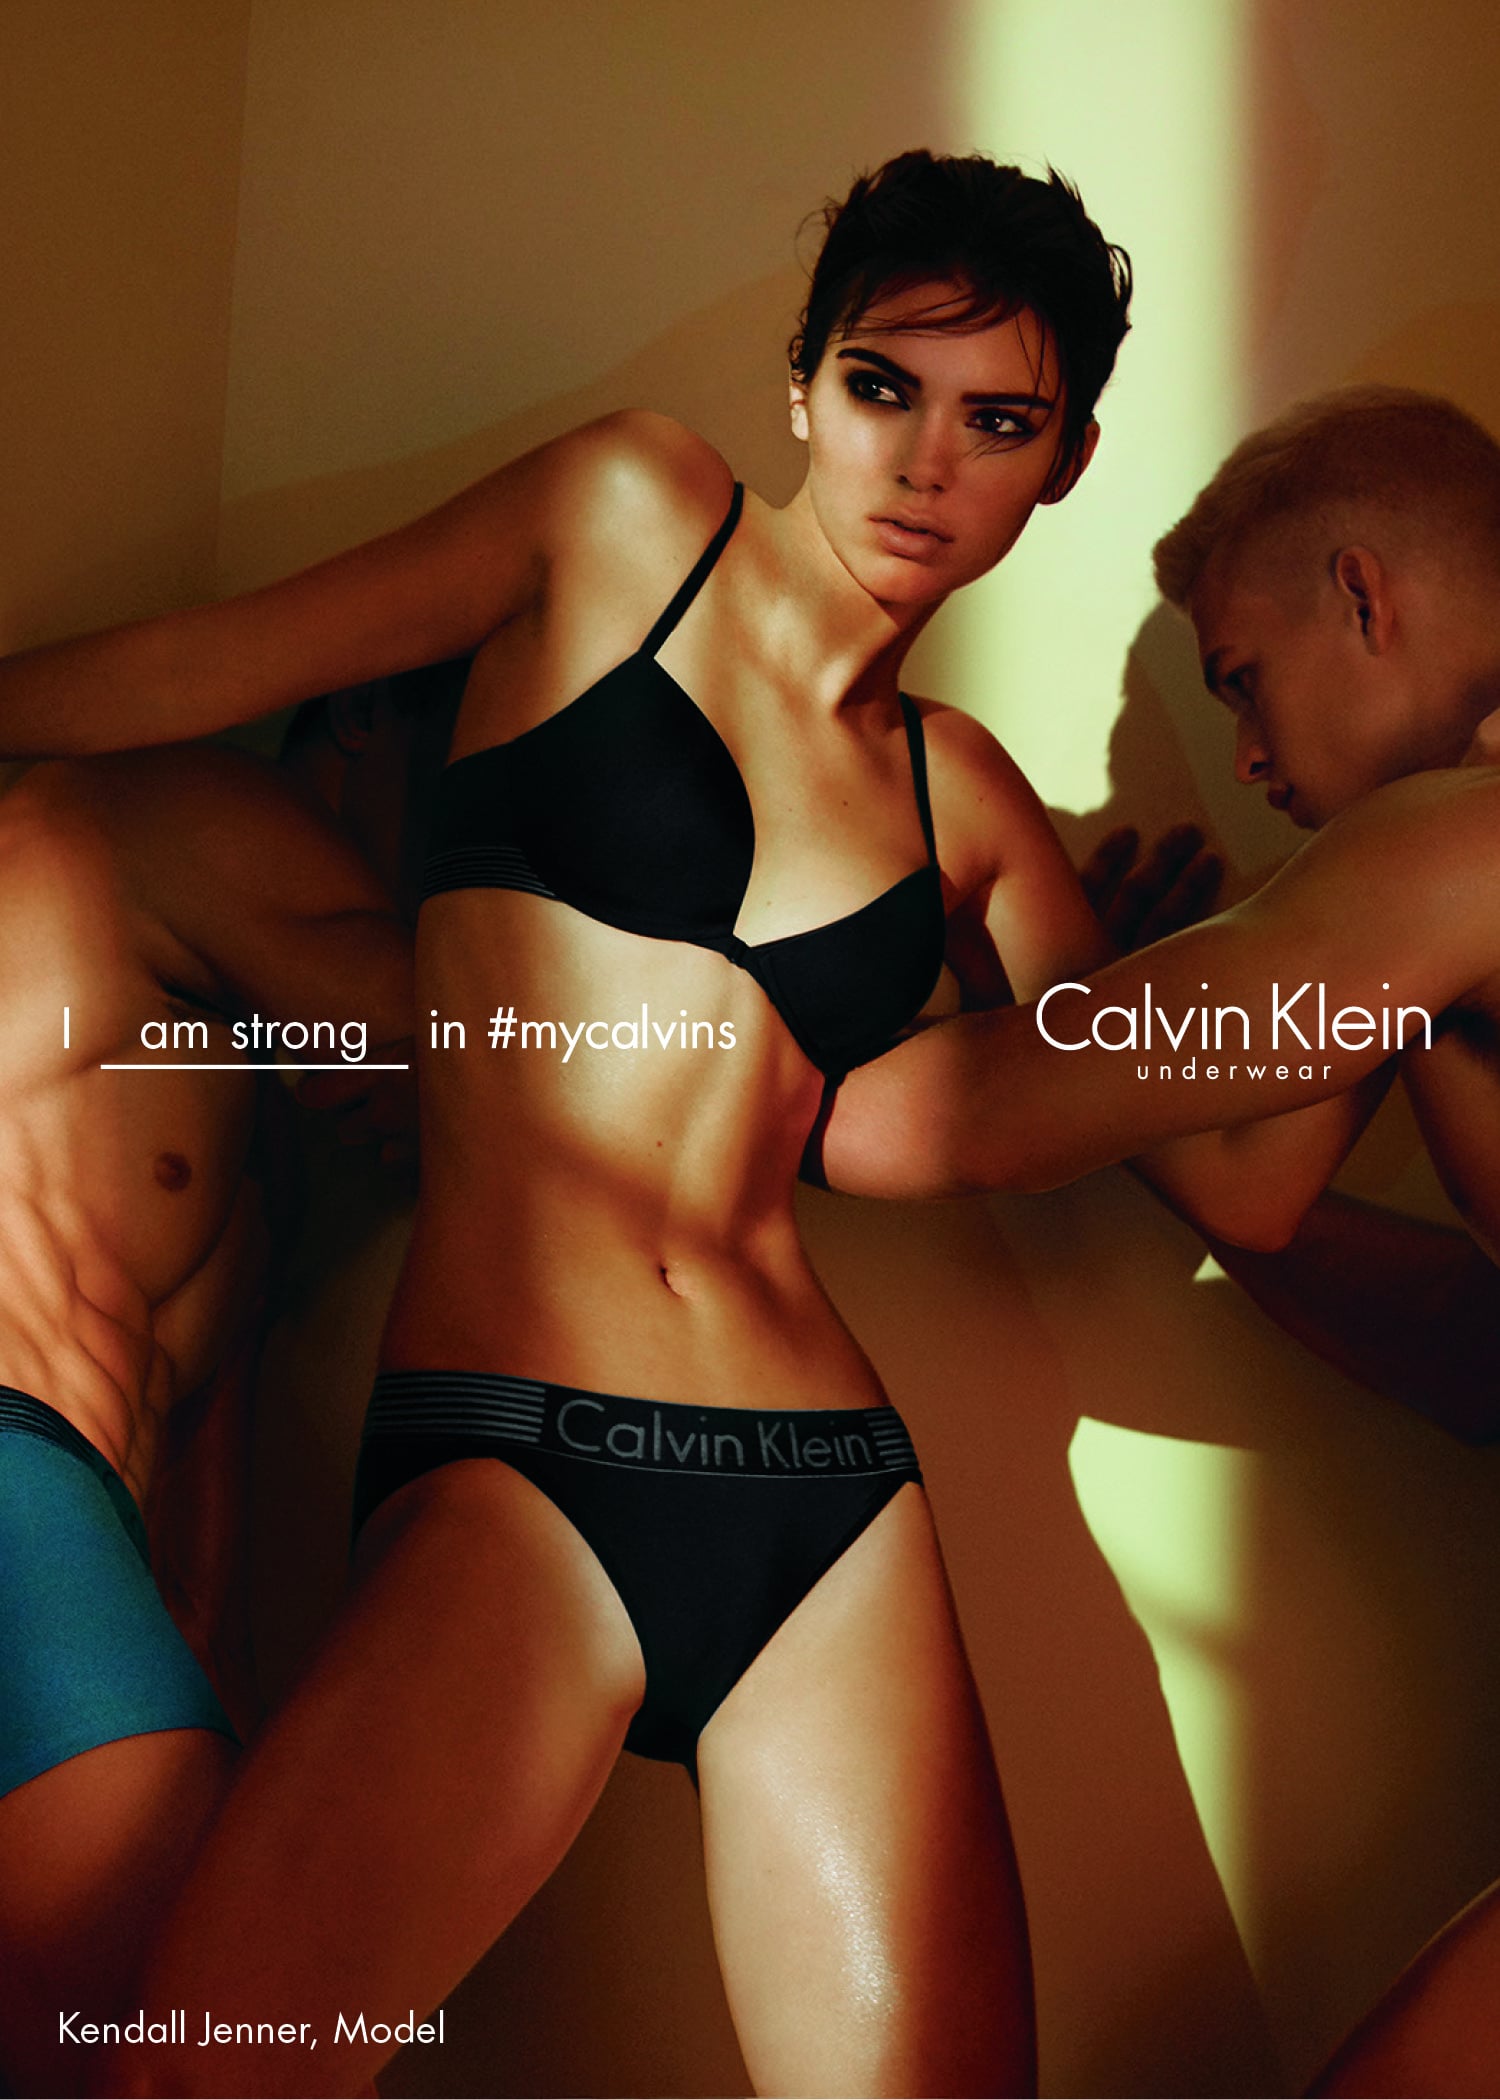 Calvin Klein, Intimates & Sleepwear, 15 36b